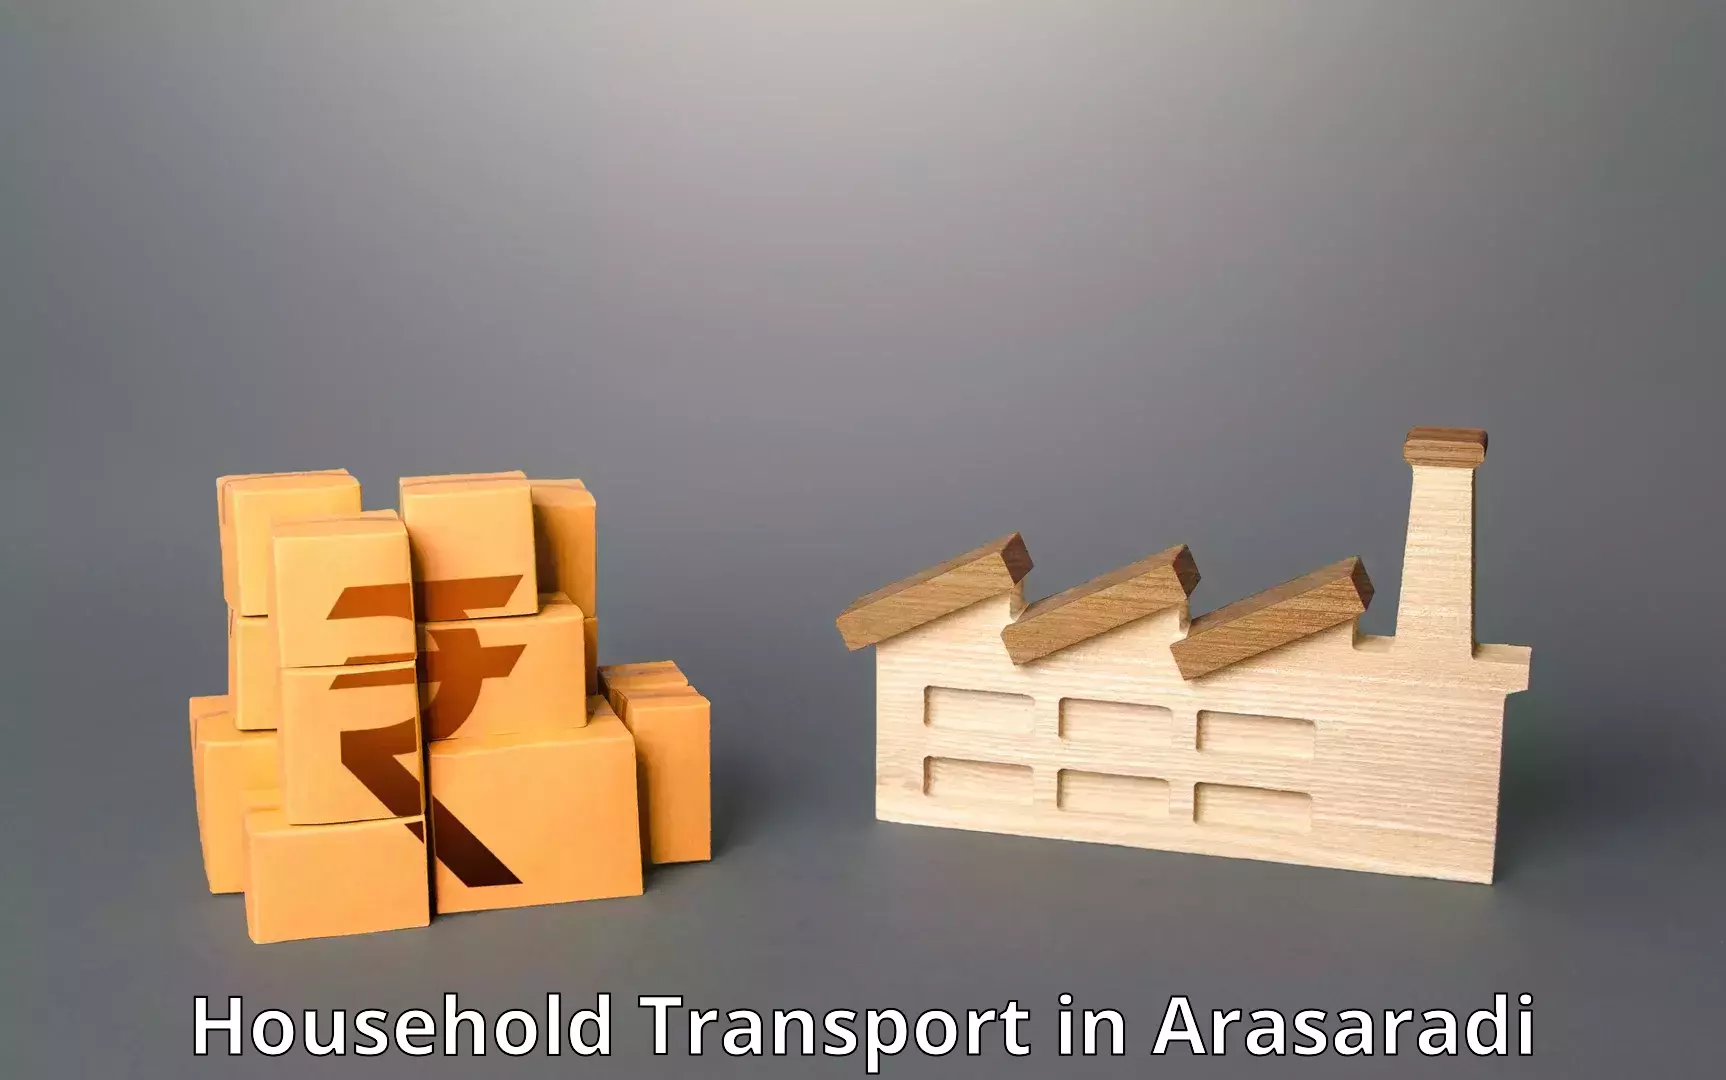 Household transport solutions in Arasaradi